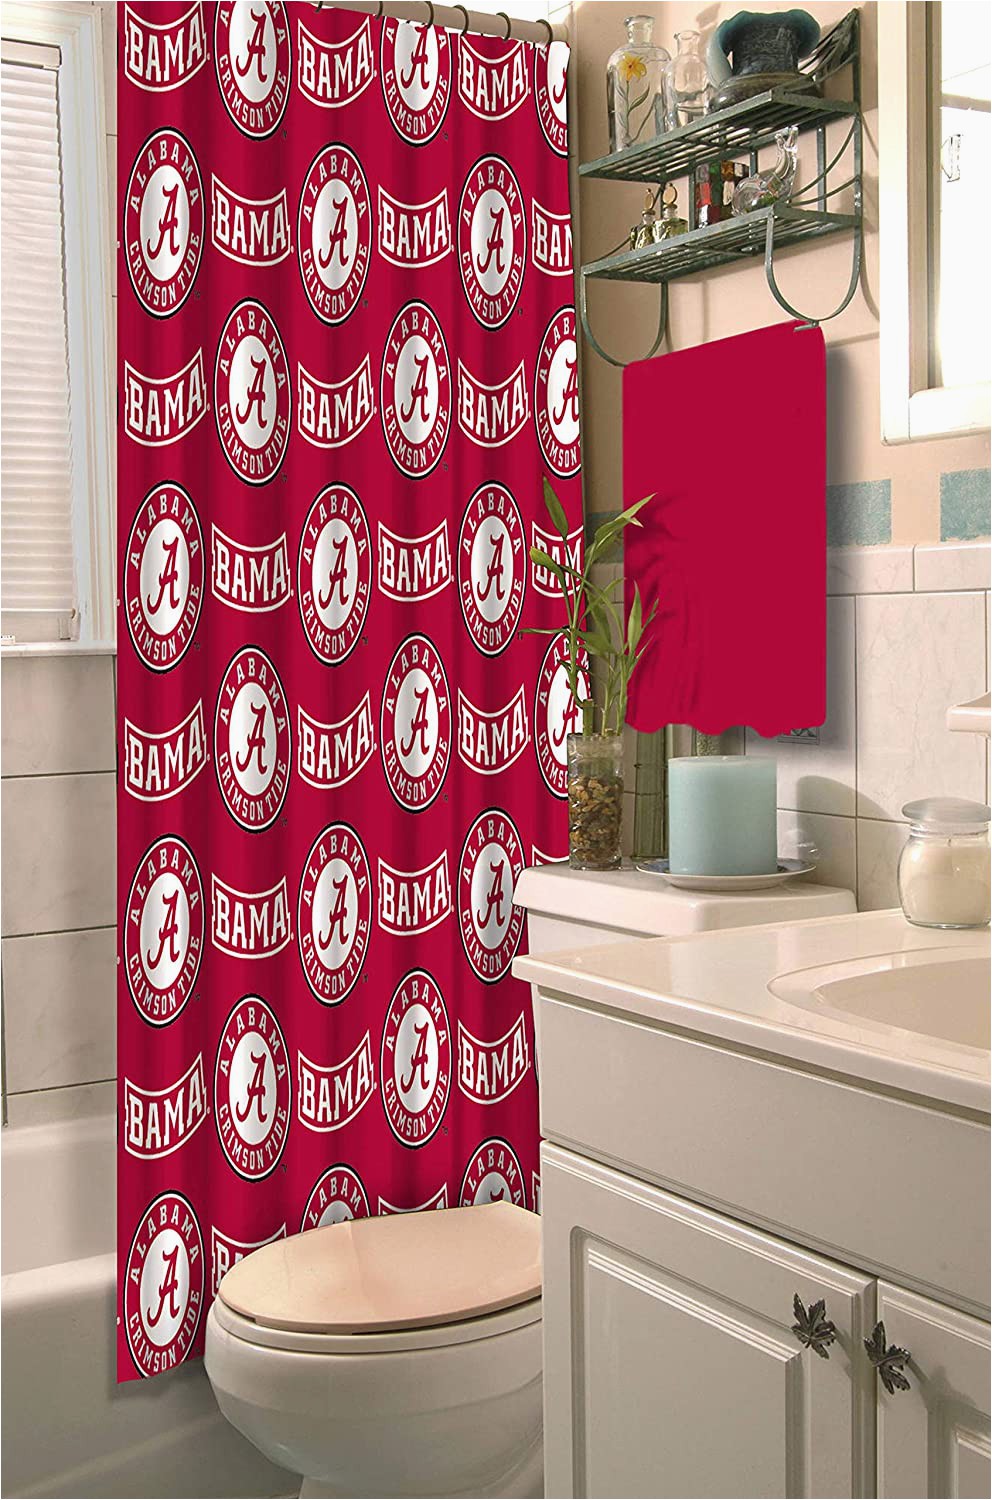 Alabama Crimson Tide Bathroom Rug Set Ncaa University Of Alabama Decorative Bath Collection Shower Curtain